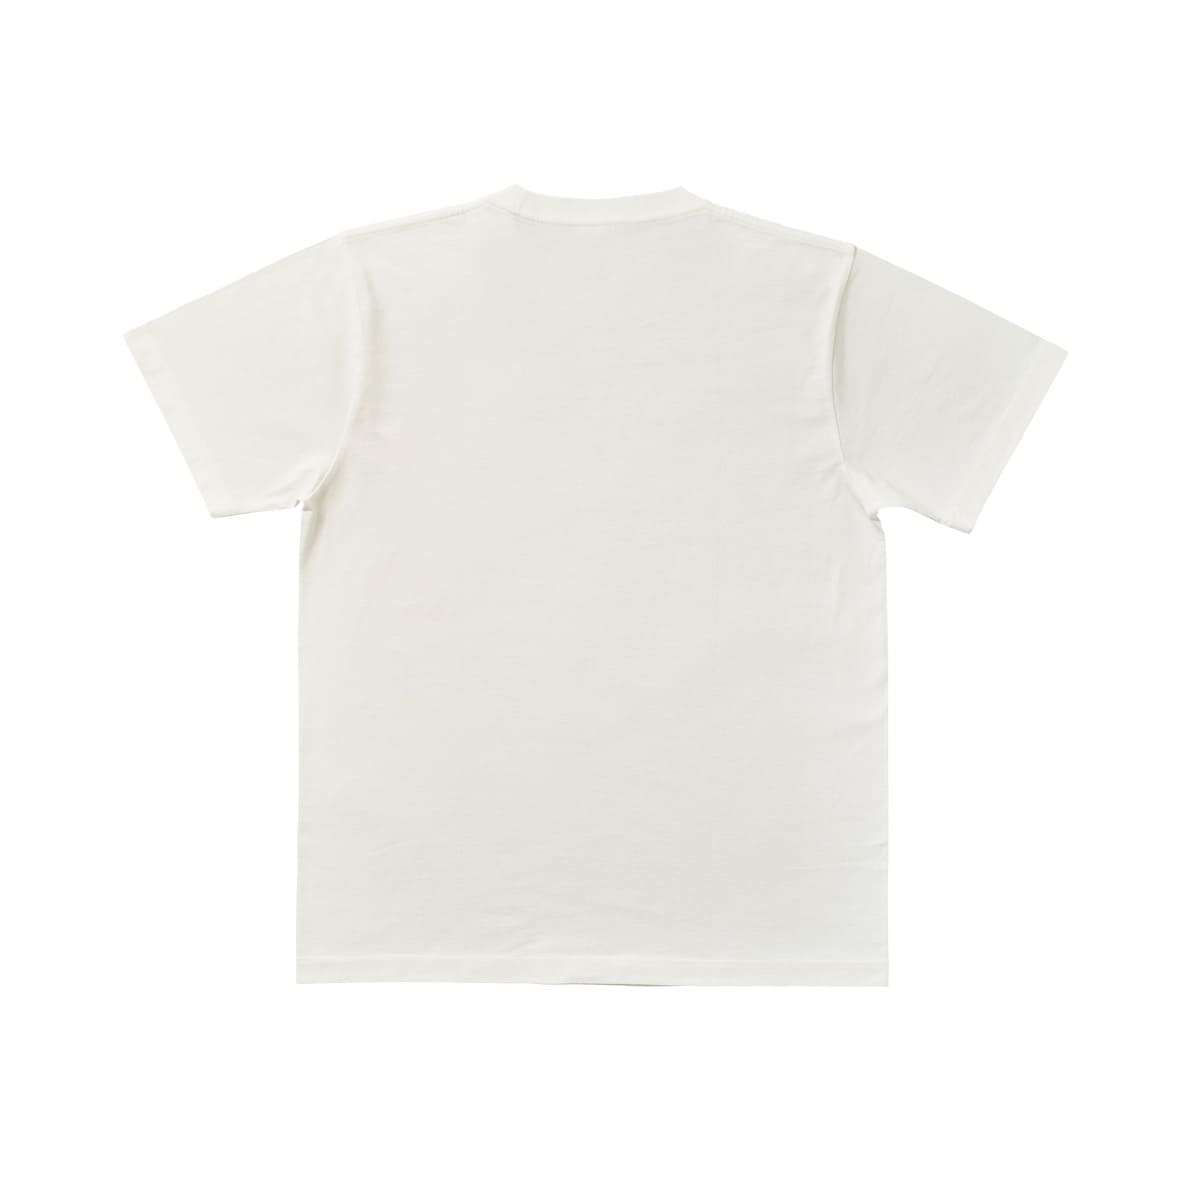 SLOTH スロス オーガニックコットンTシャツ <キッズサイズ> (品番ST1103-KIDS)